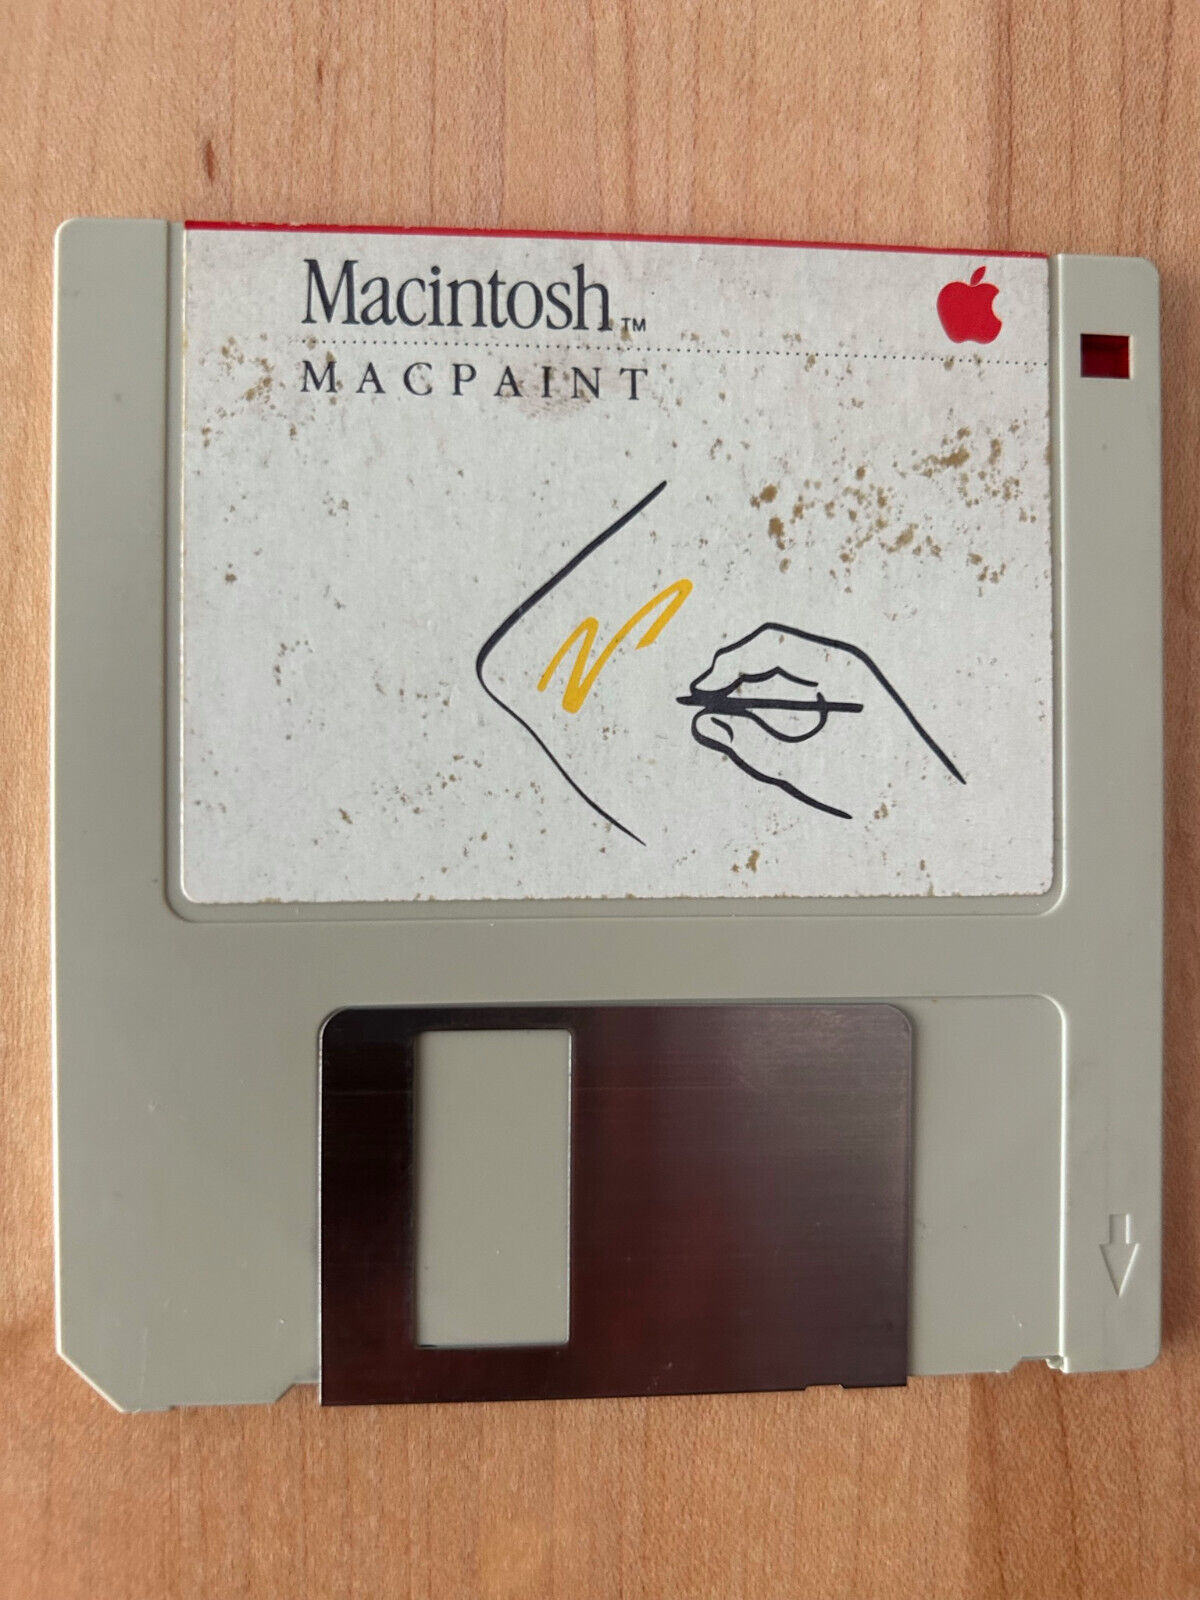 Apple Macintosh MacPaint Ver 1.4 (Item# 690-5011-C) – Tested